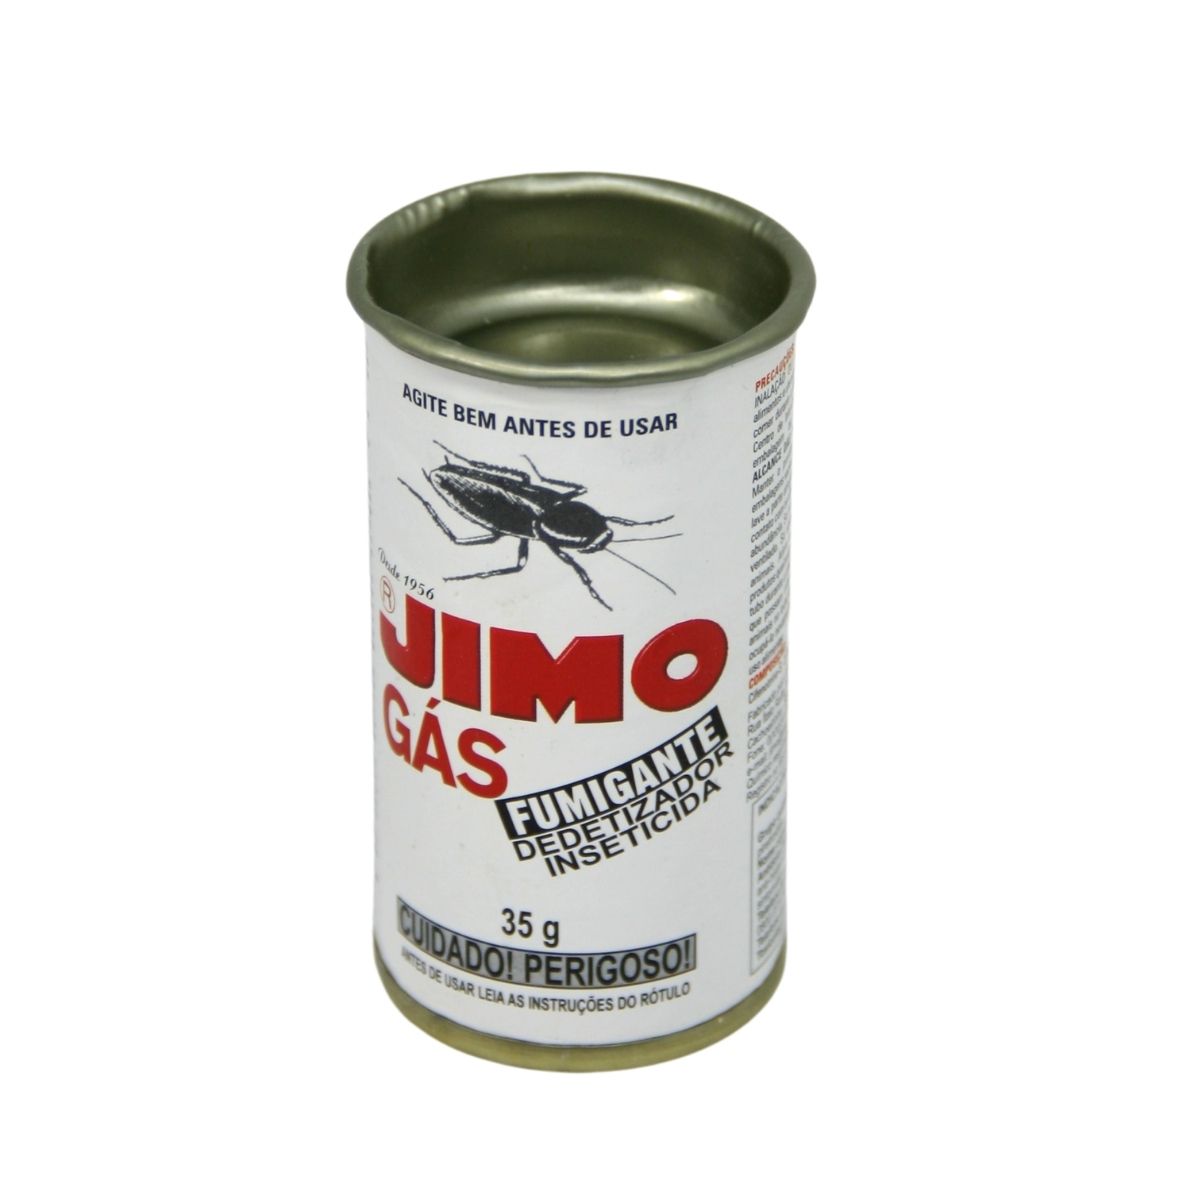 JIMO GAS COM 2 UN 35G CADA